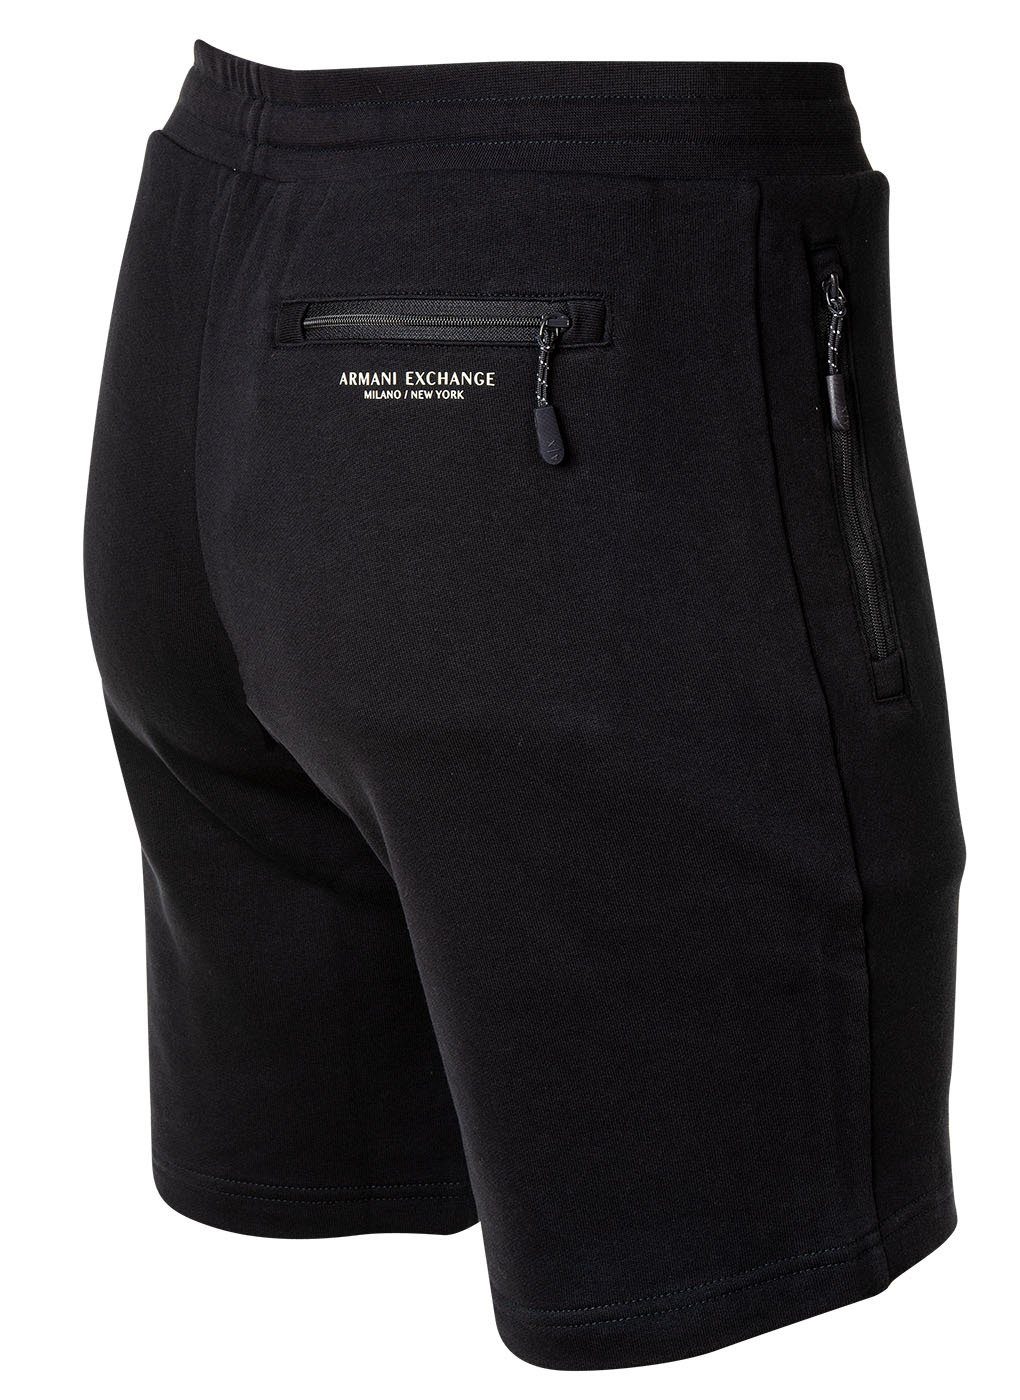 ARMANI EXCHANGE Sweatshorts Herren Pants, Marine - kurz Loungewear Jogginghose